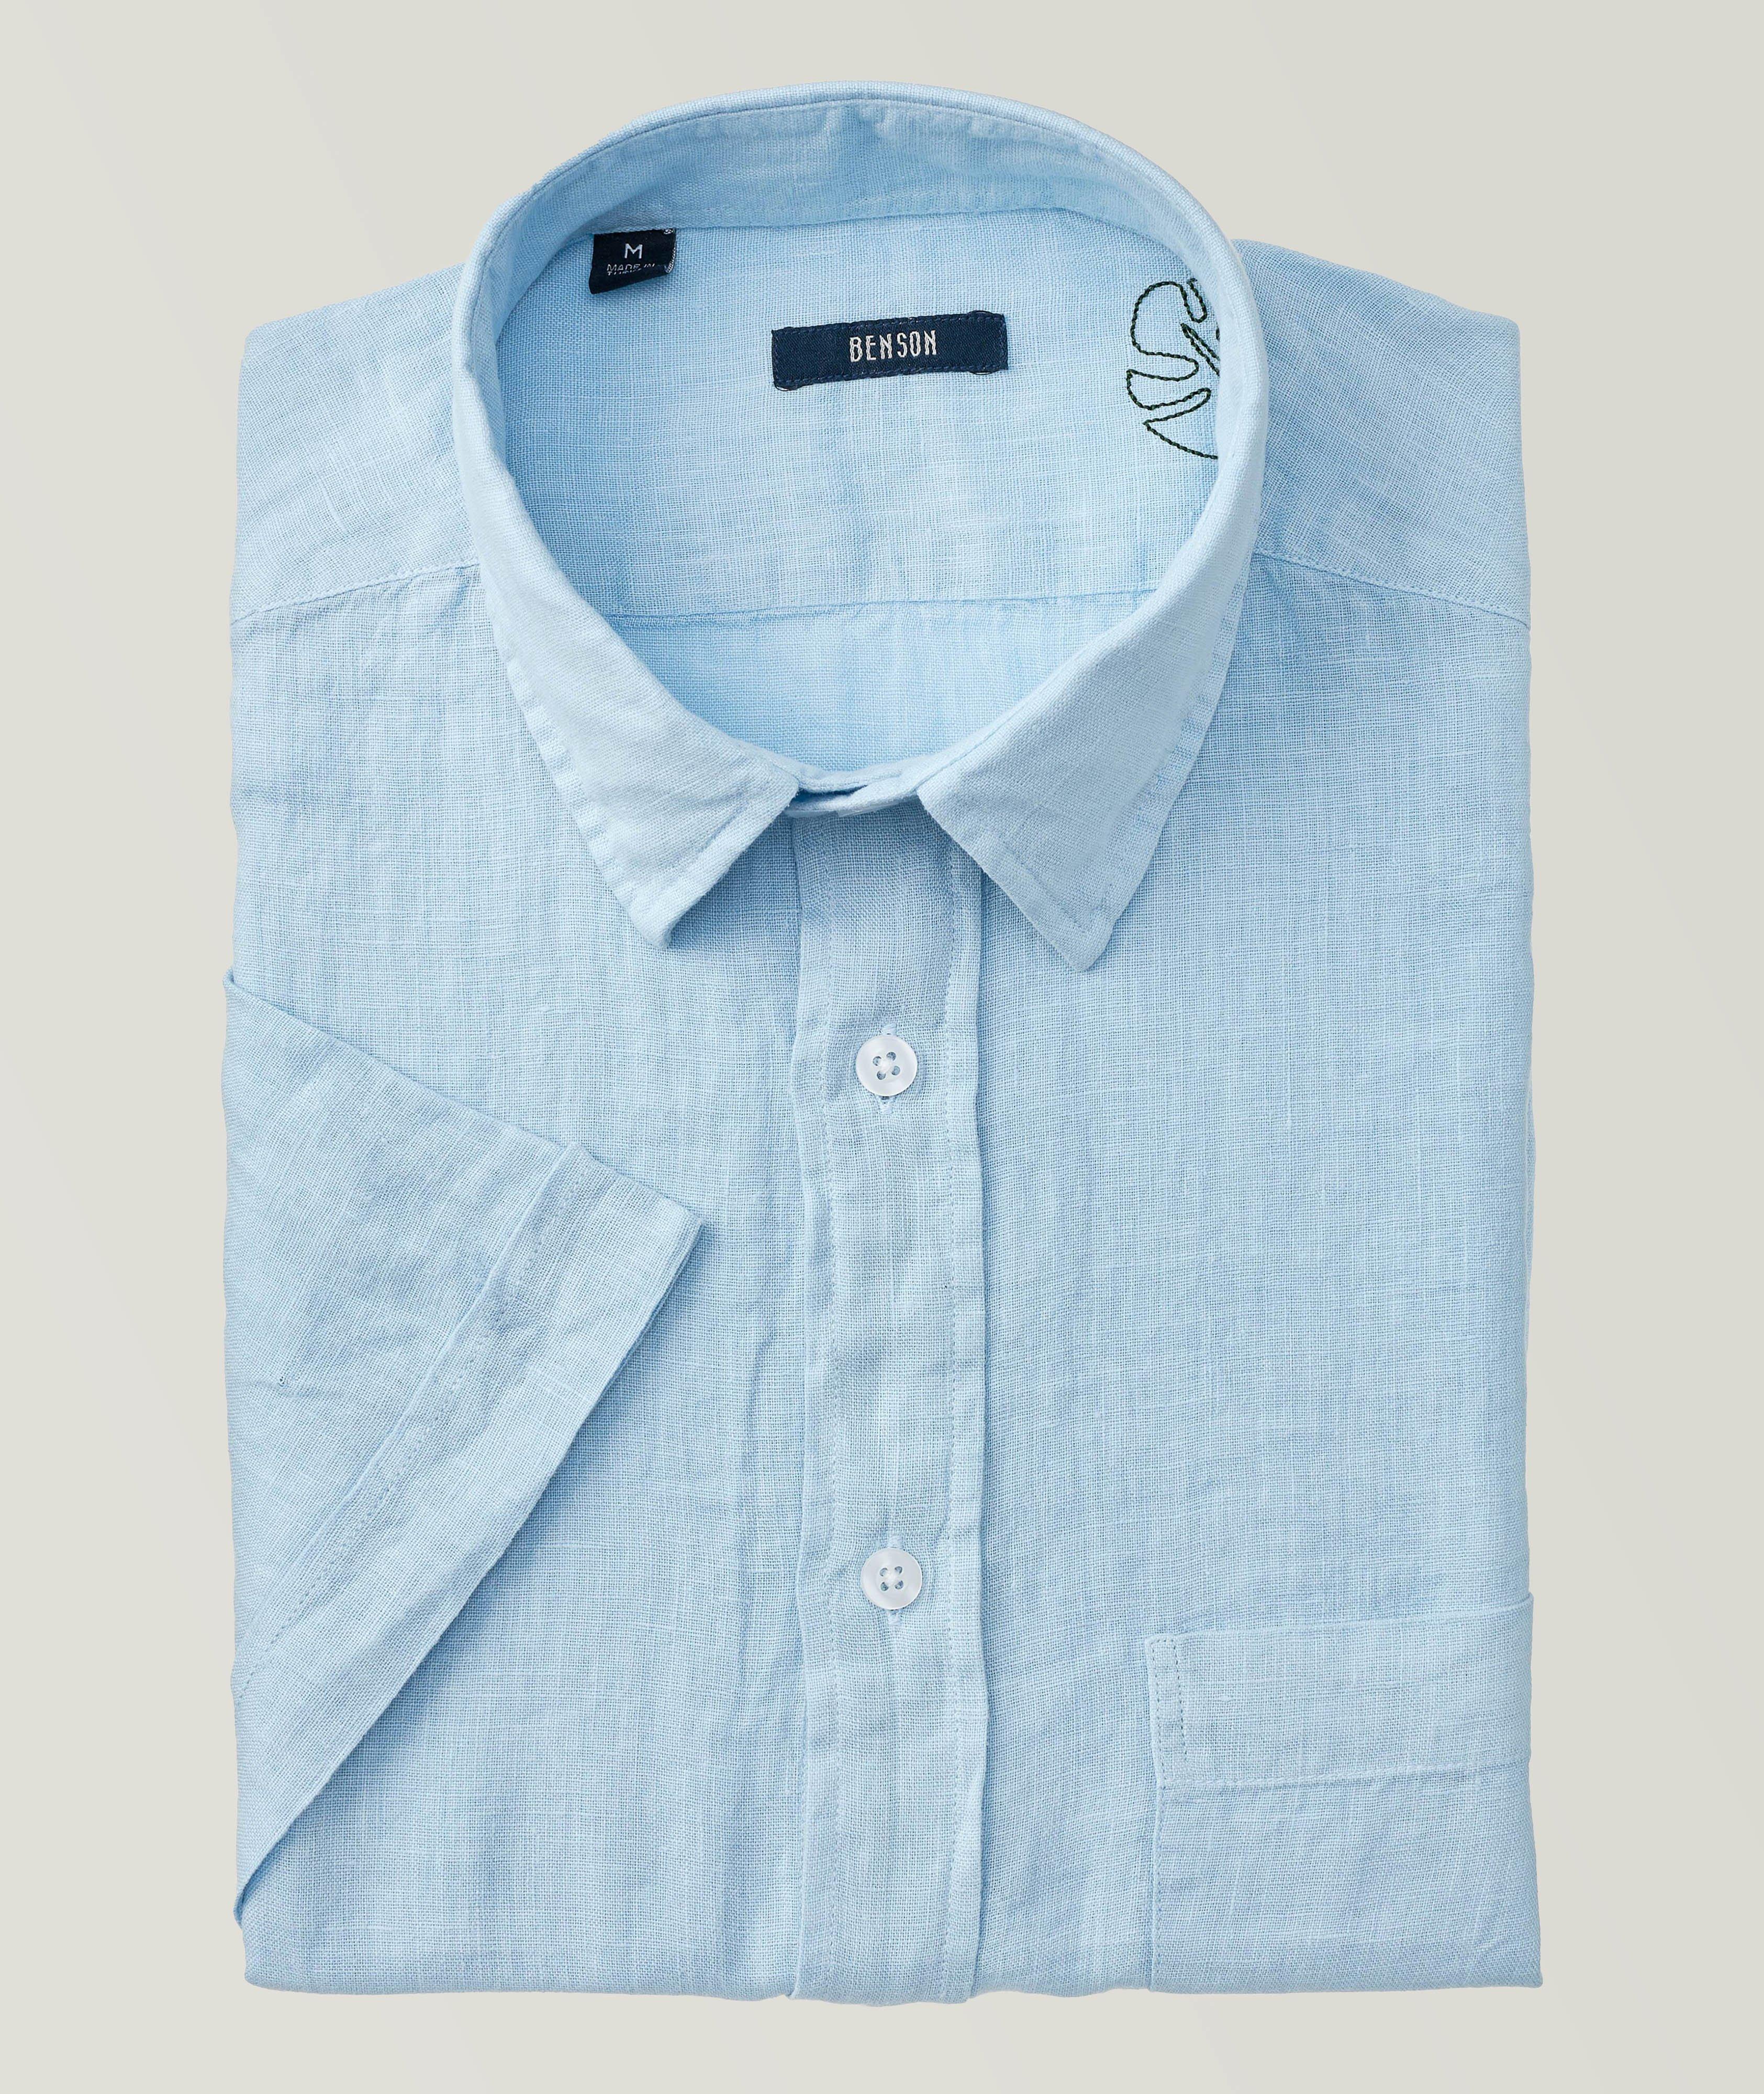 Contemporary-Fit Linen Sport Shirt image 0